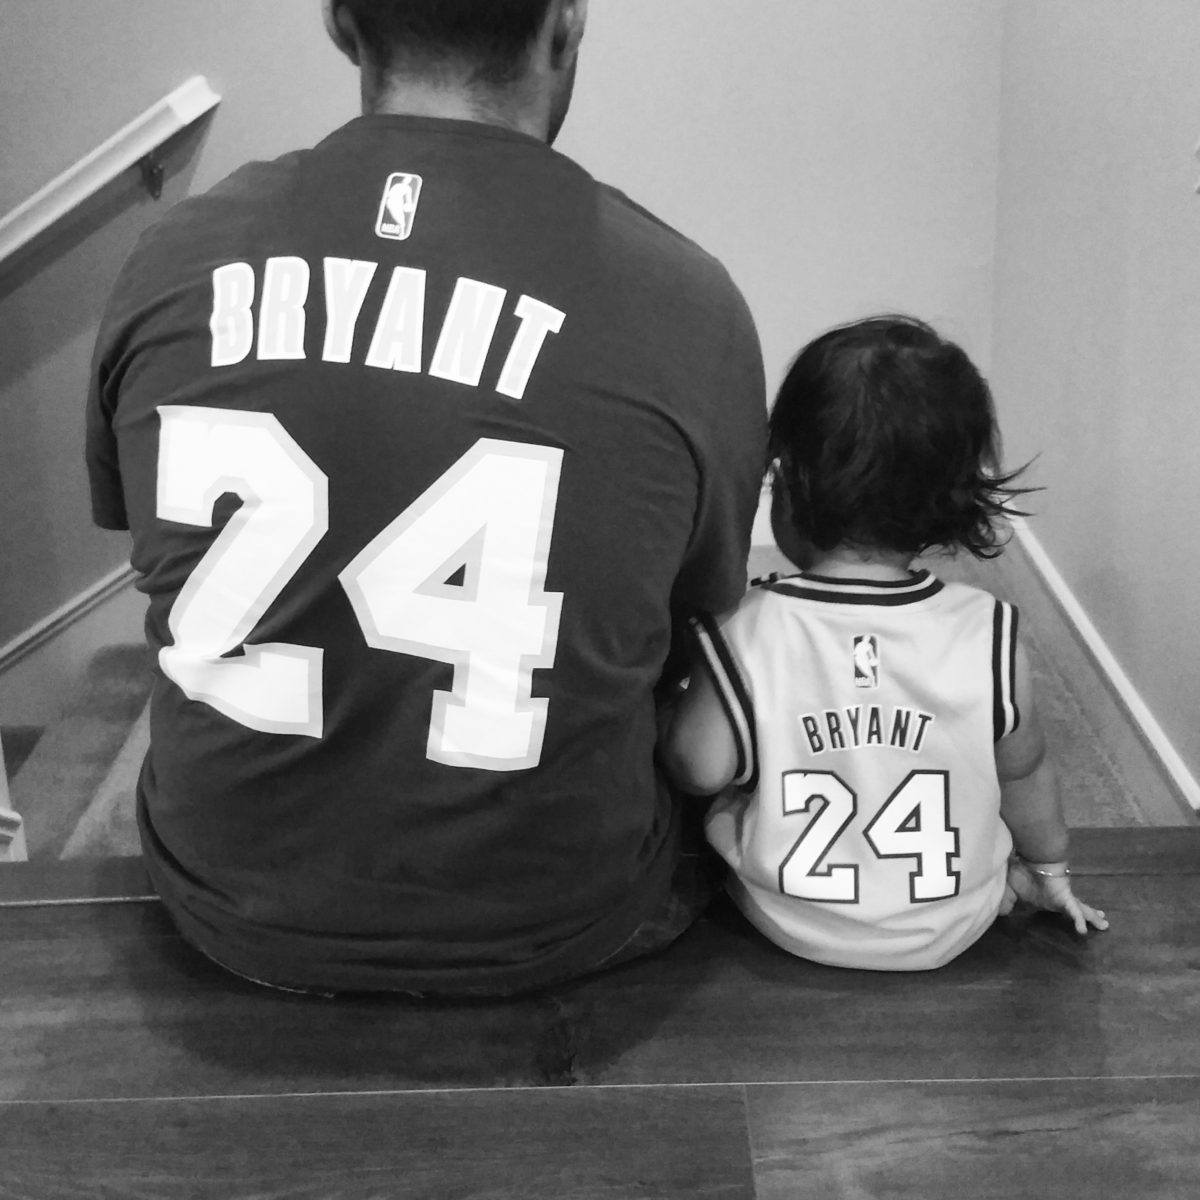 father and daughter wearing matching kobe bryant basketball jerseys